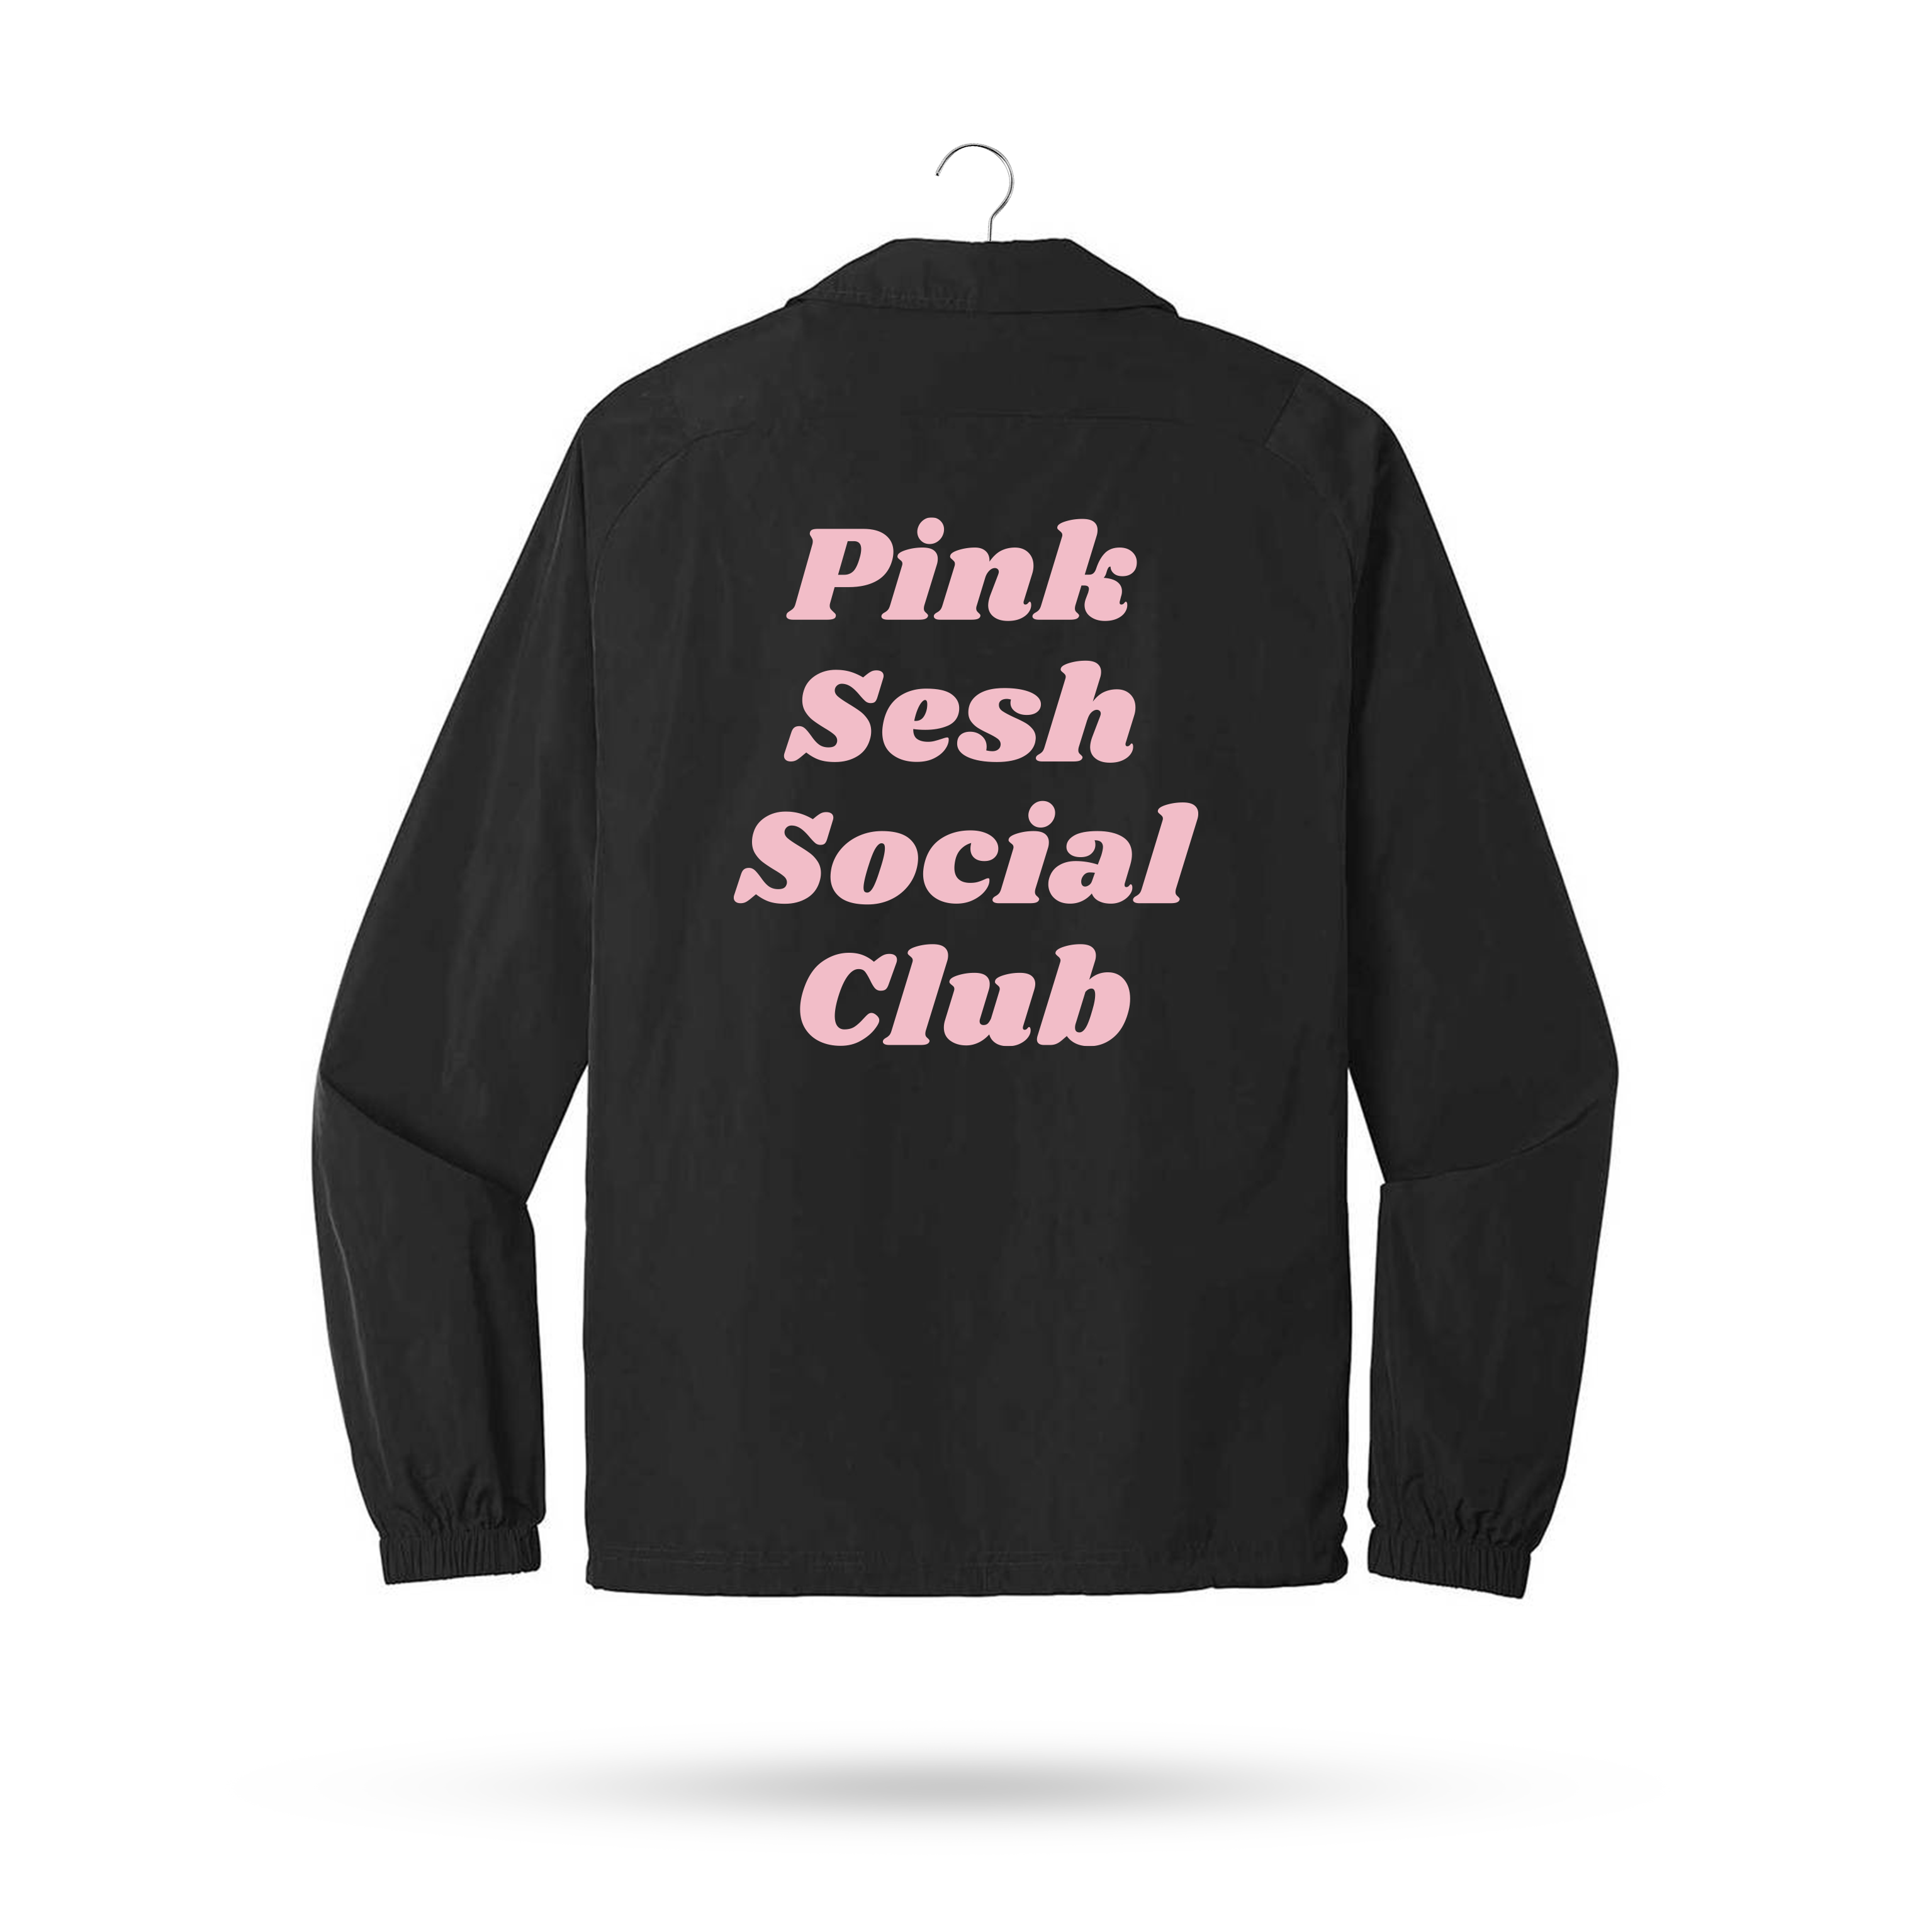 Pink Sesh Social Club Jacket